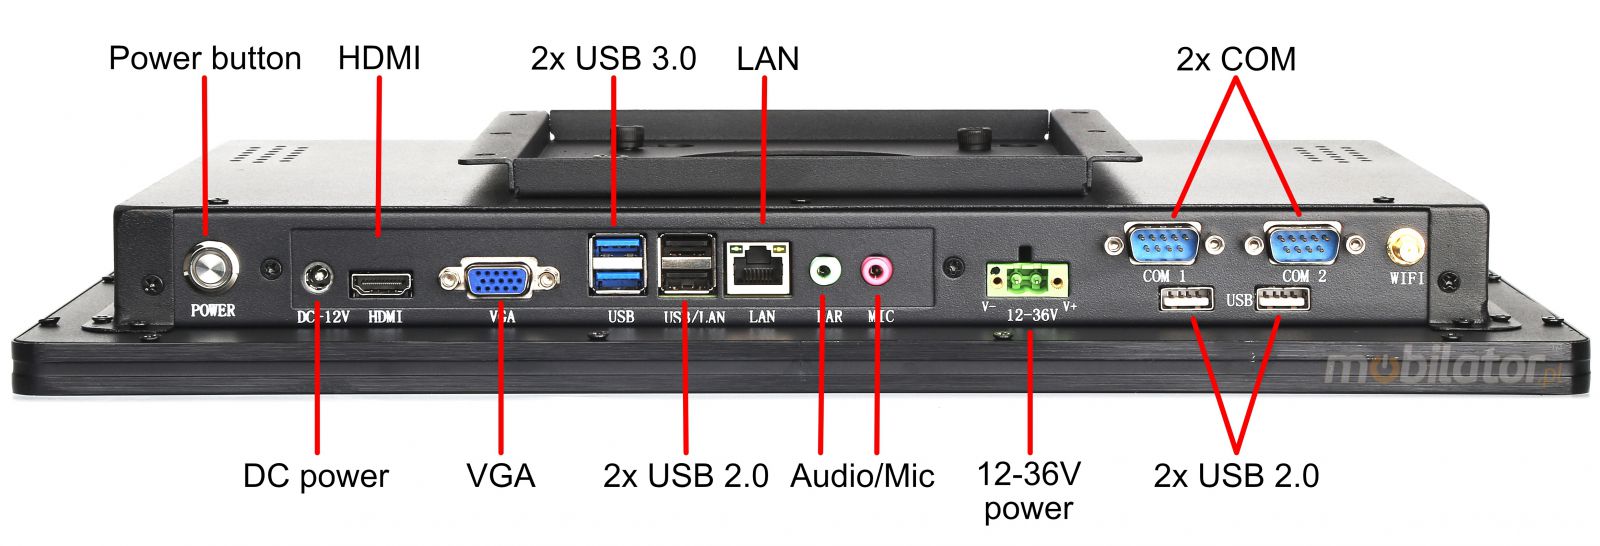 BIBOX-156PC2 connectors: 2x USB 3.0 | 2x USB 2.0 | 2x COM | 2x LAN 1x VGA | 1x HDMI | DC 12V